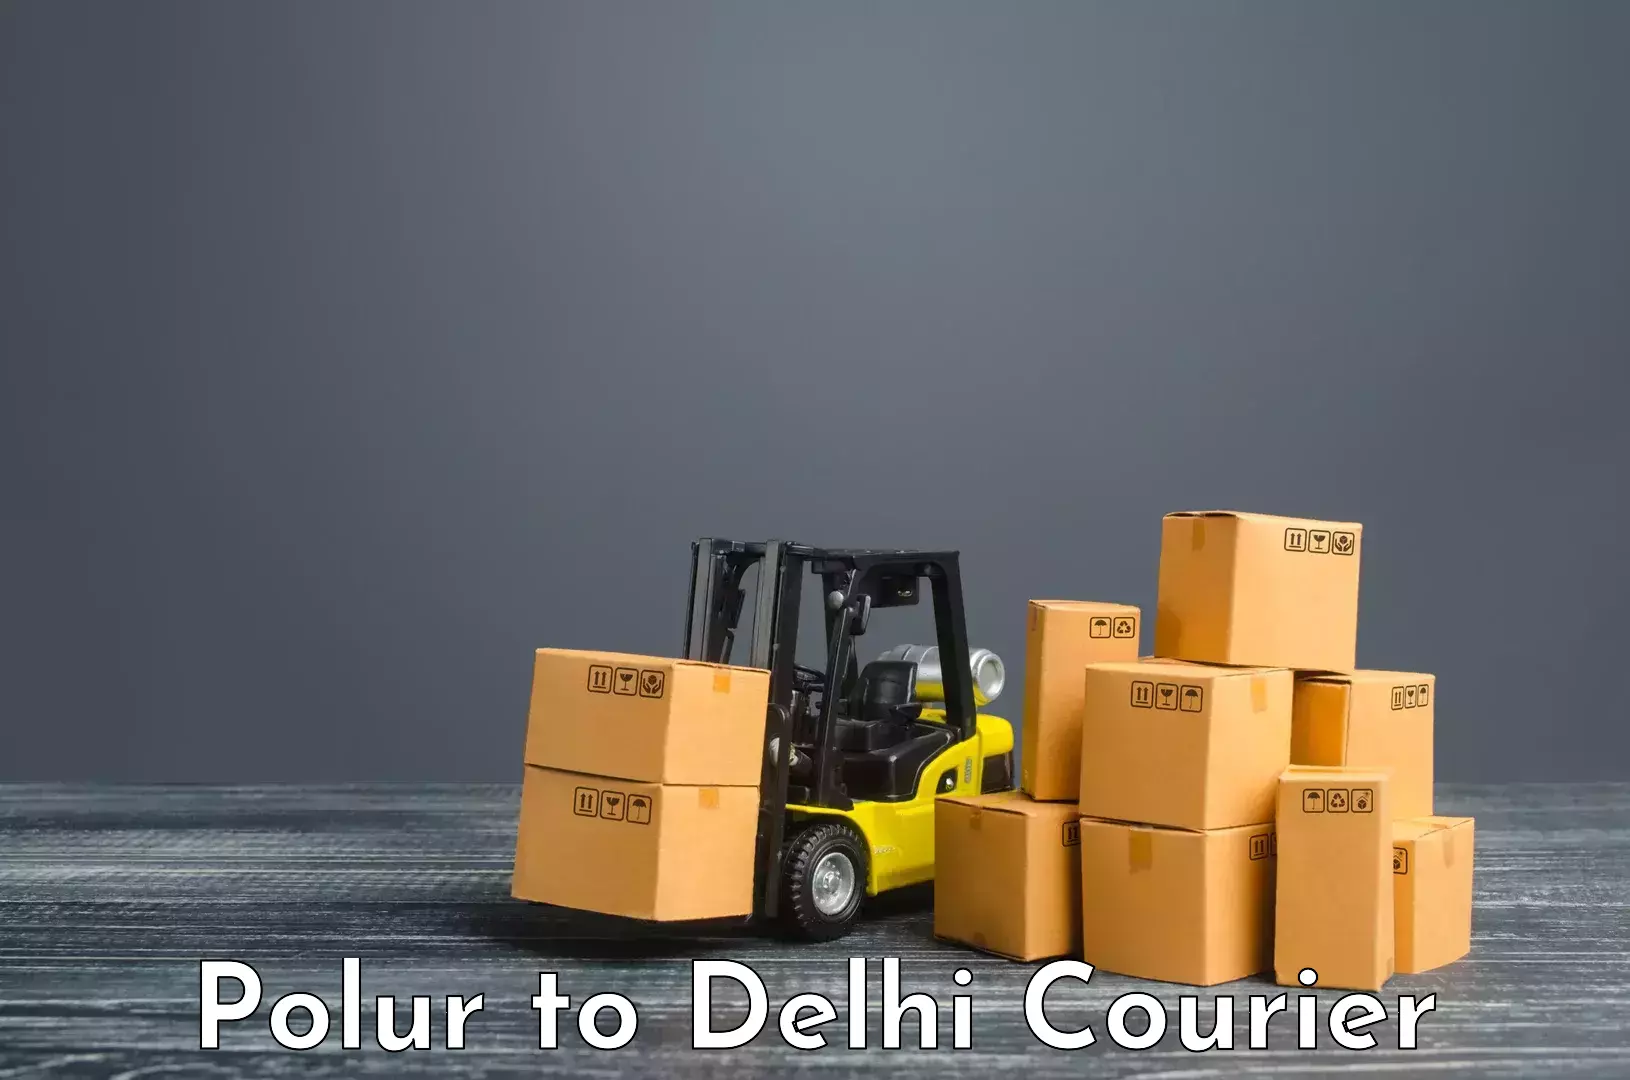 24-hour courier service Polur to University of Delhi